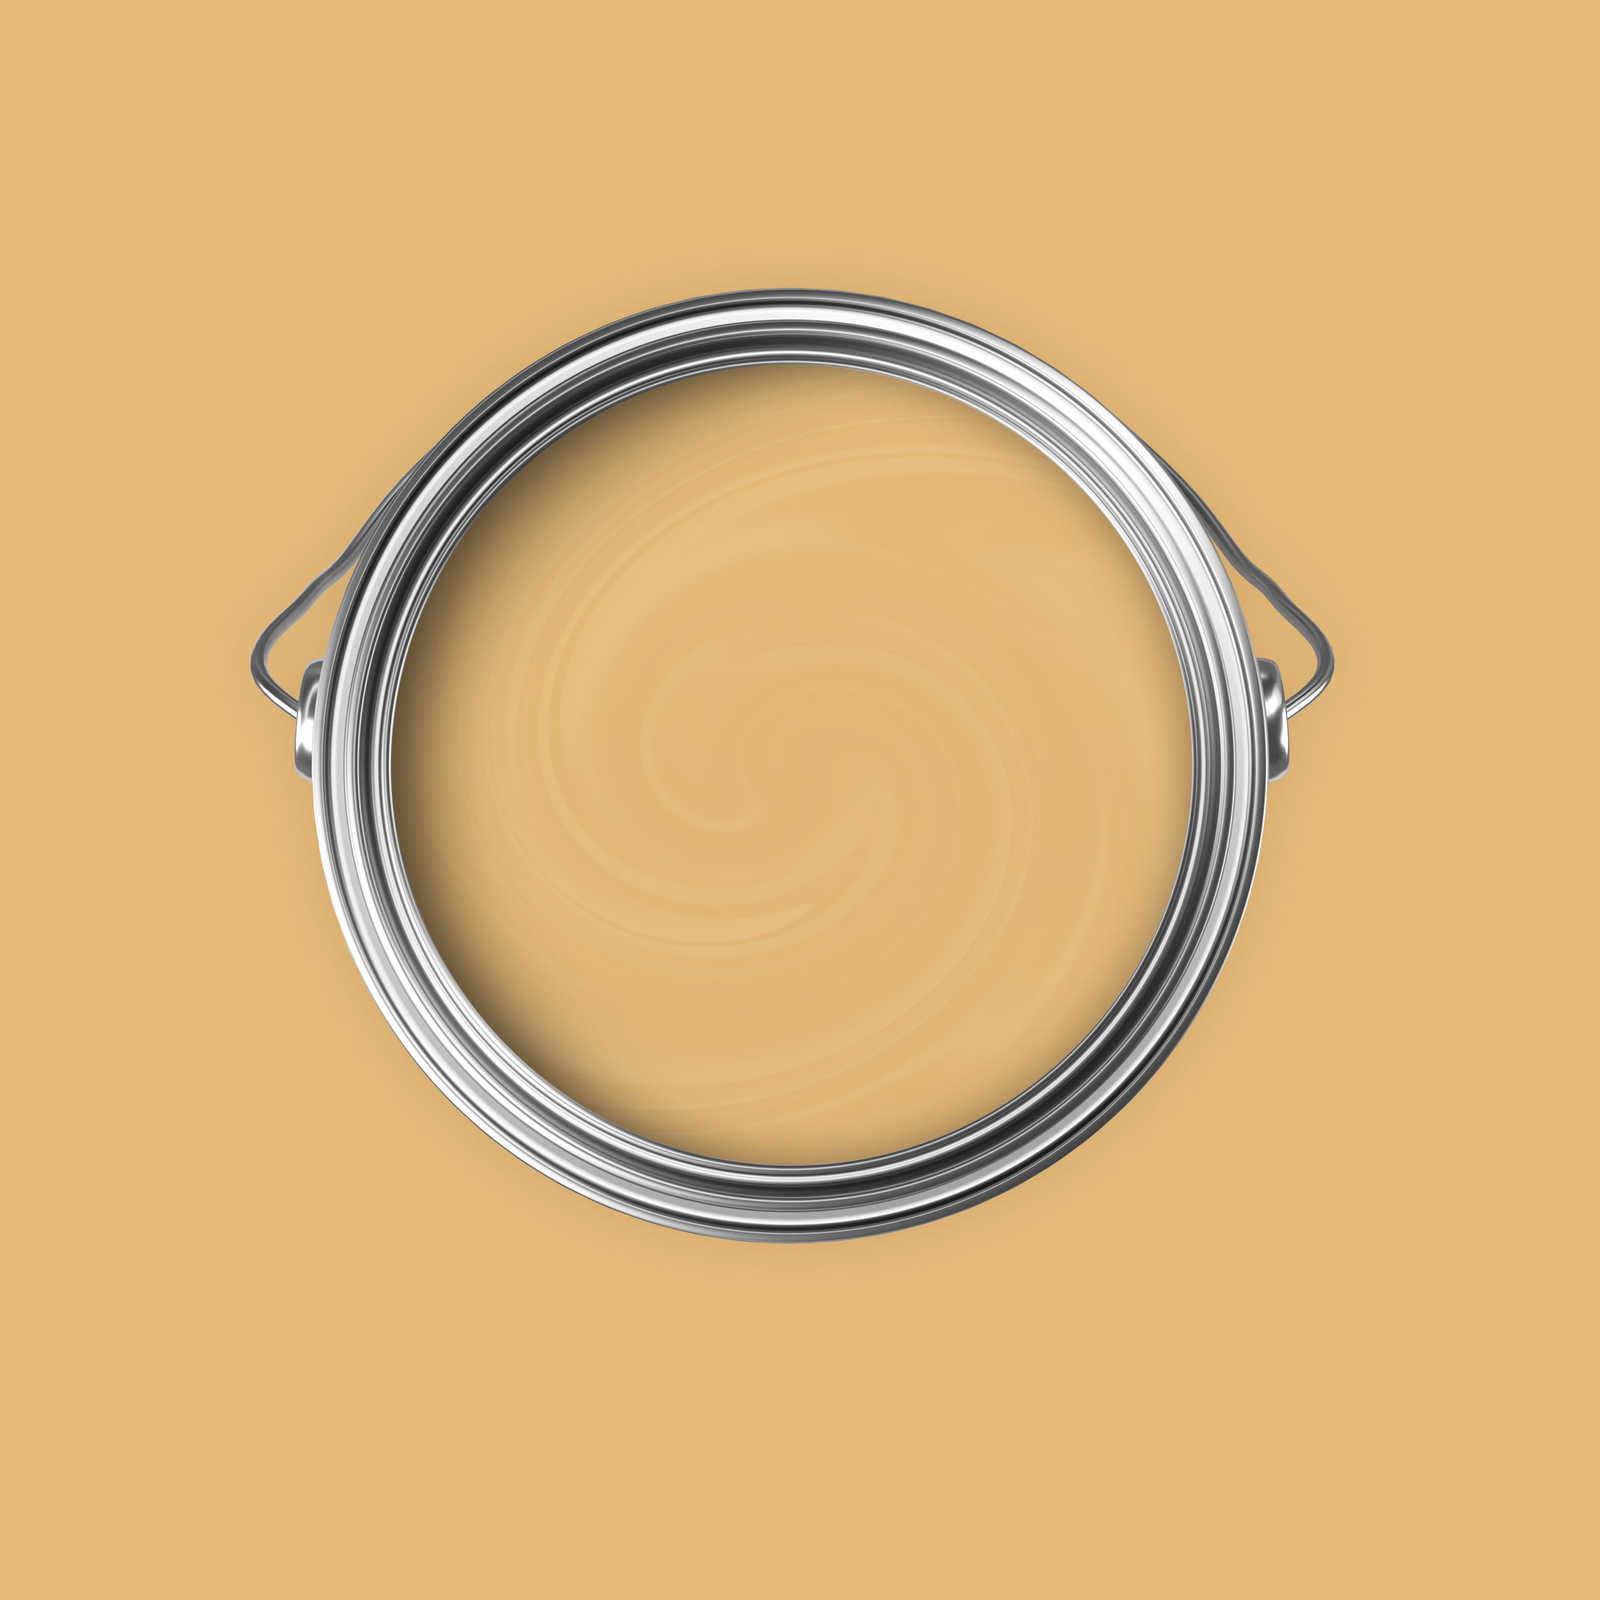             Premium Wall Paint Wake Up Mustard Yellow »Beige Orange/Sassy Saffron« NW811 – 5 litre
        